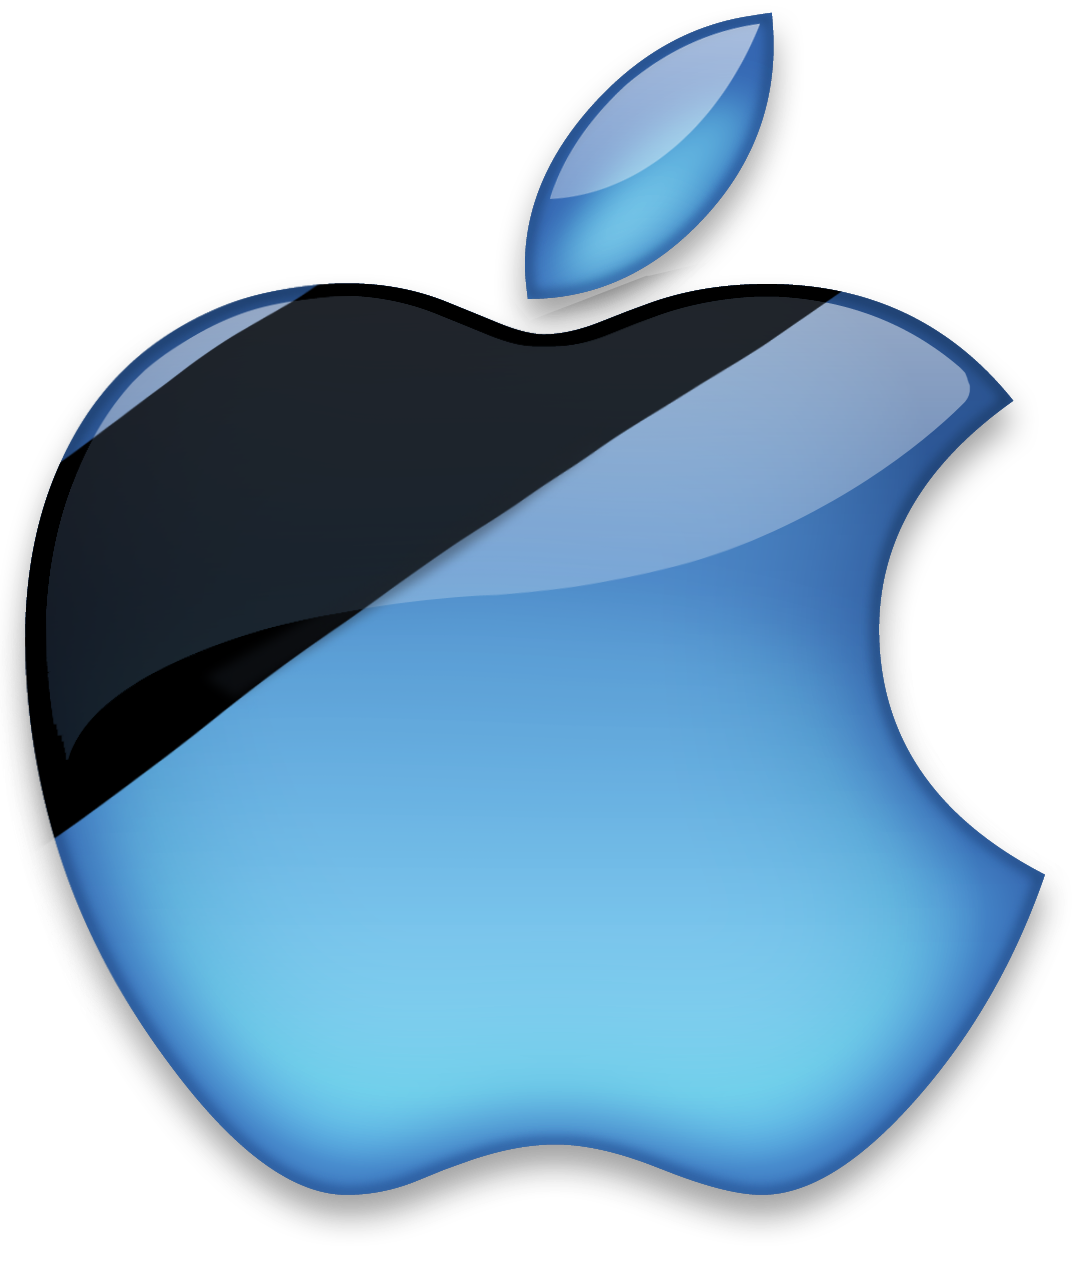 File:MAC Cosmetics logo.png - Wikipedia